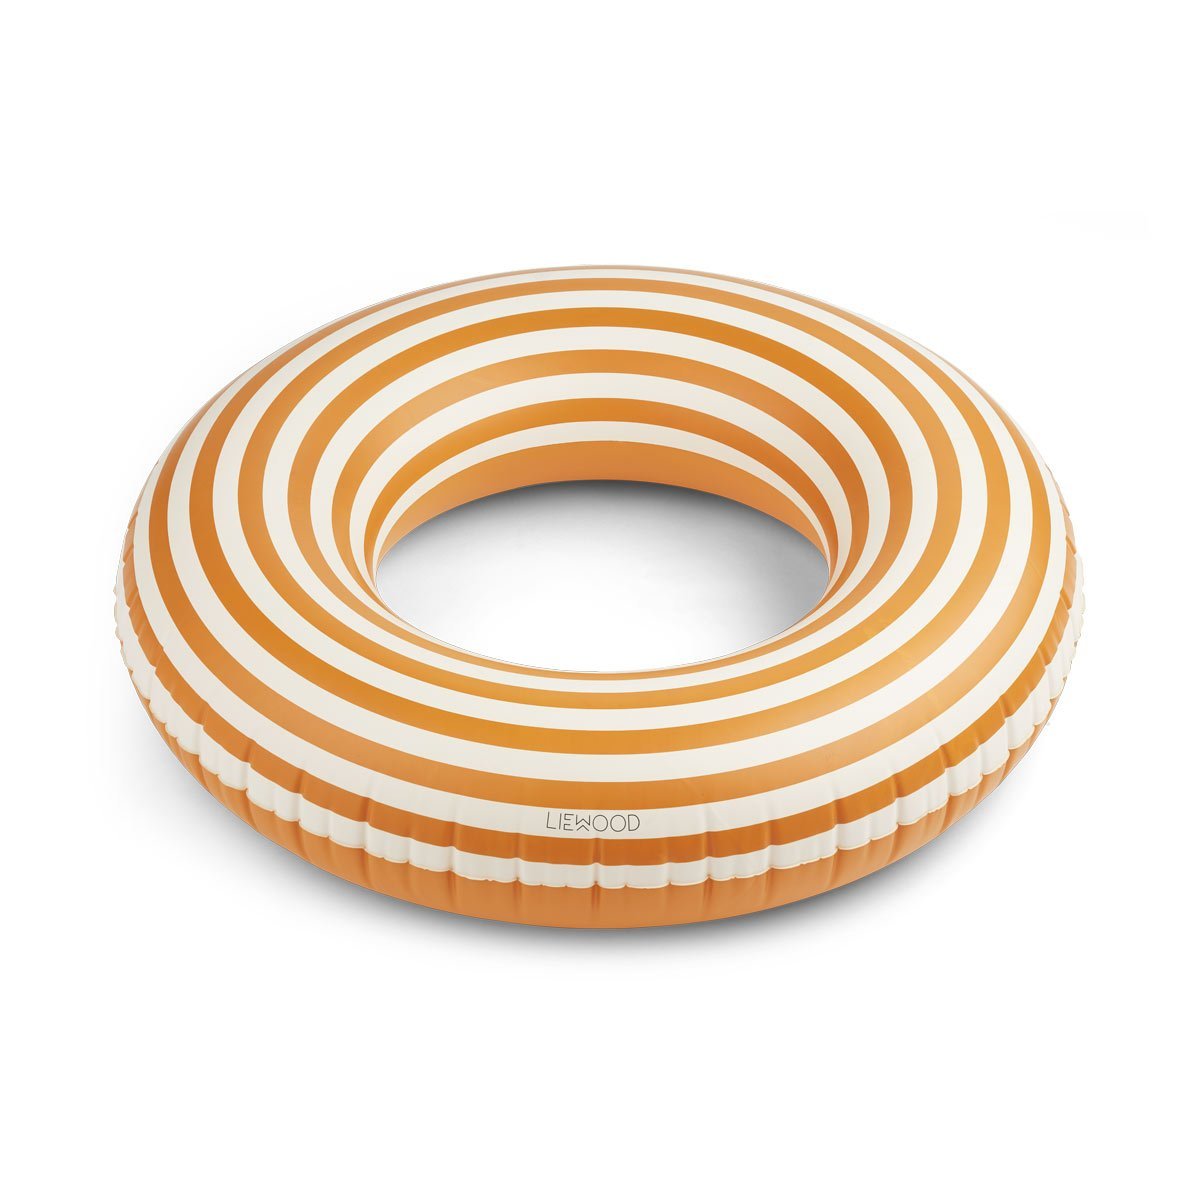 Liewood Donna Swim Ring in Stripe - Mustard/Creme de la Creme - Scandibørn